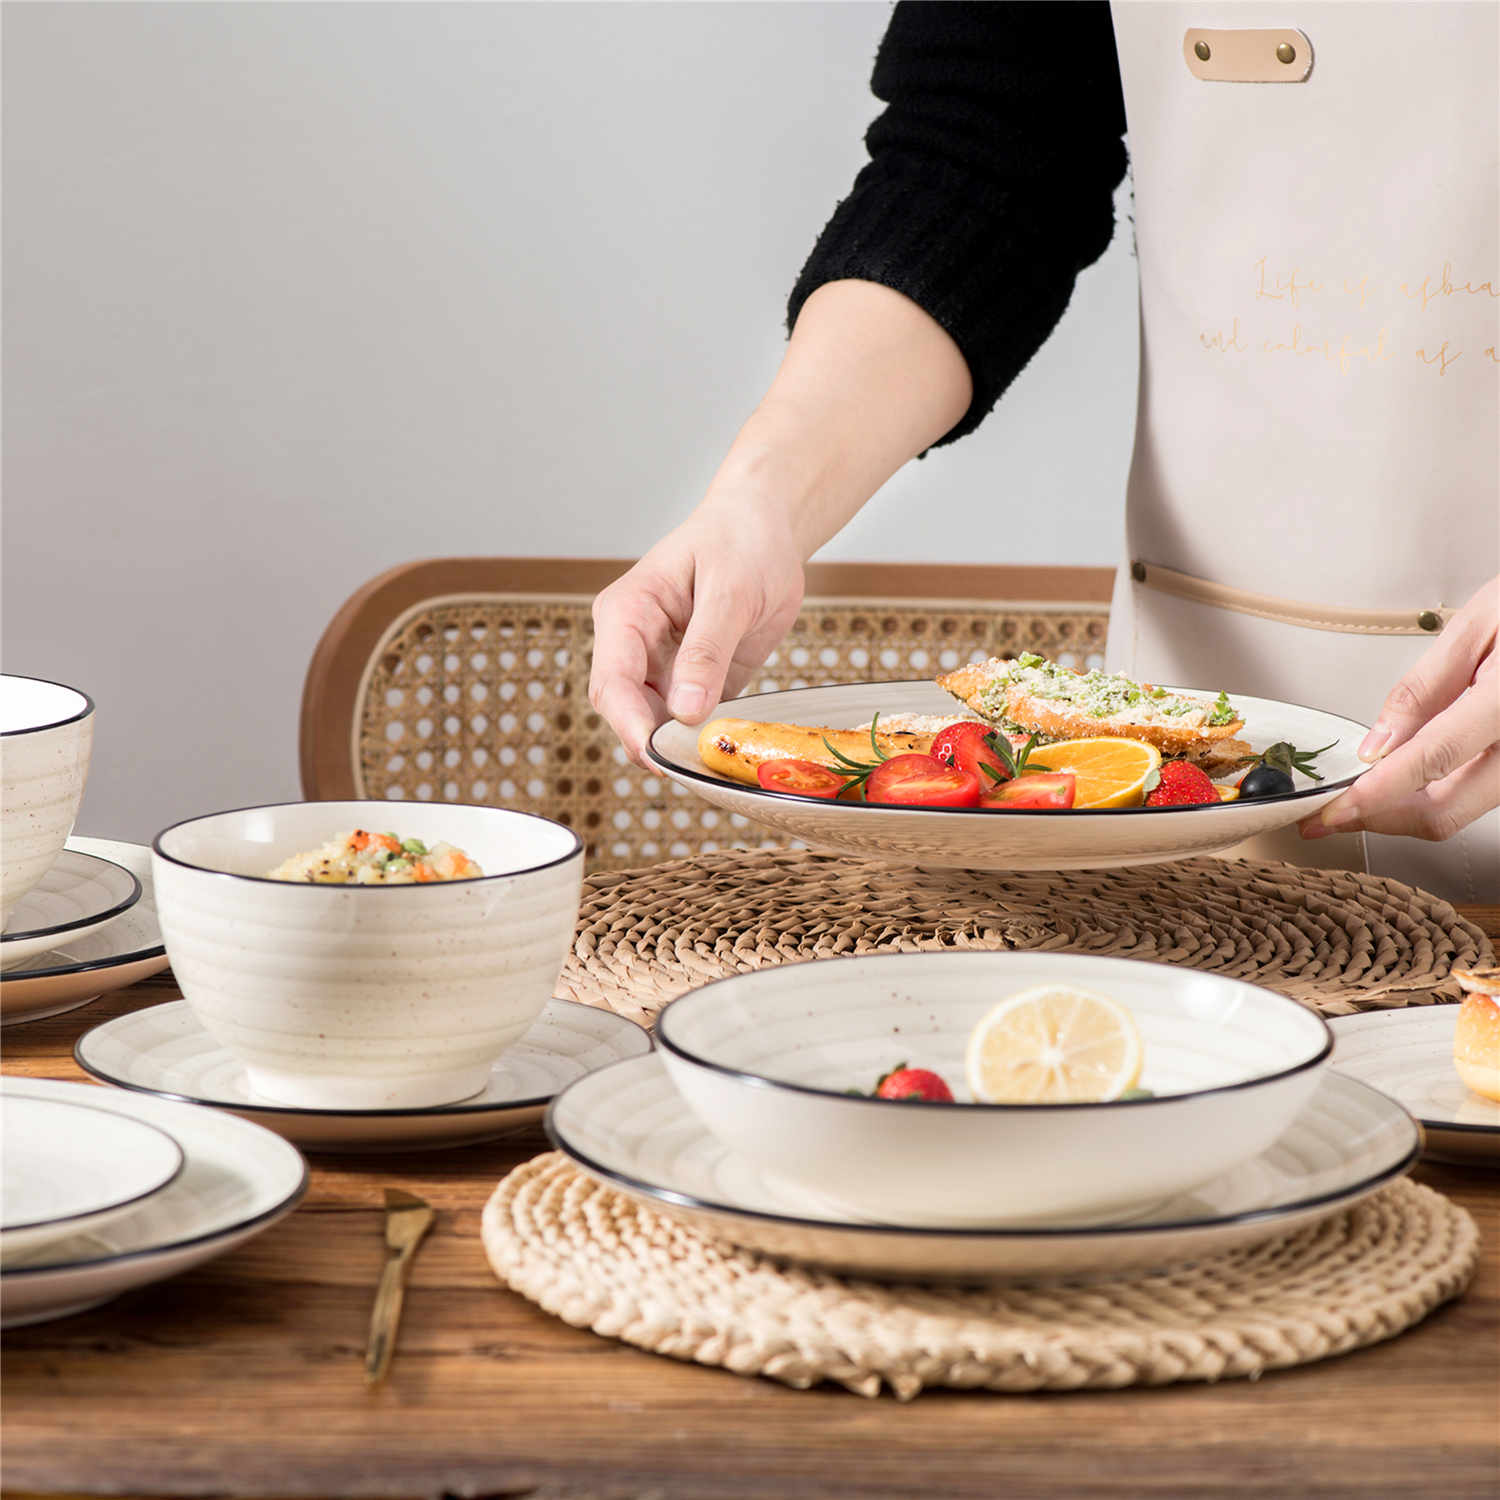 vancasso JASMIN Dinnerware Set Porcelain Patterned Plate Bowl Moroccan  Crockery